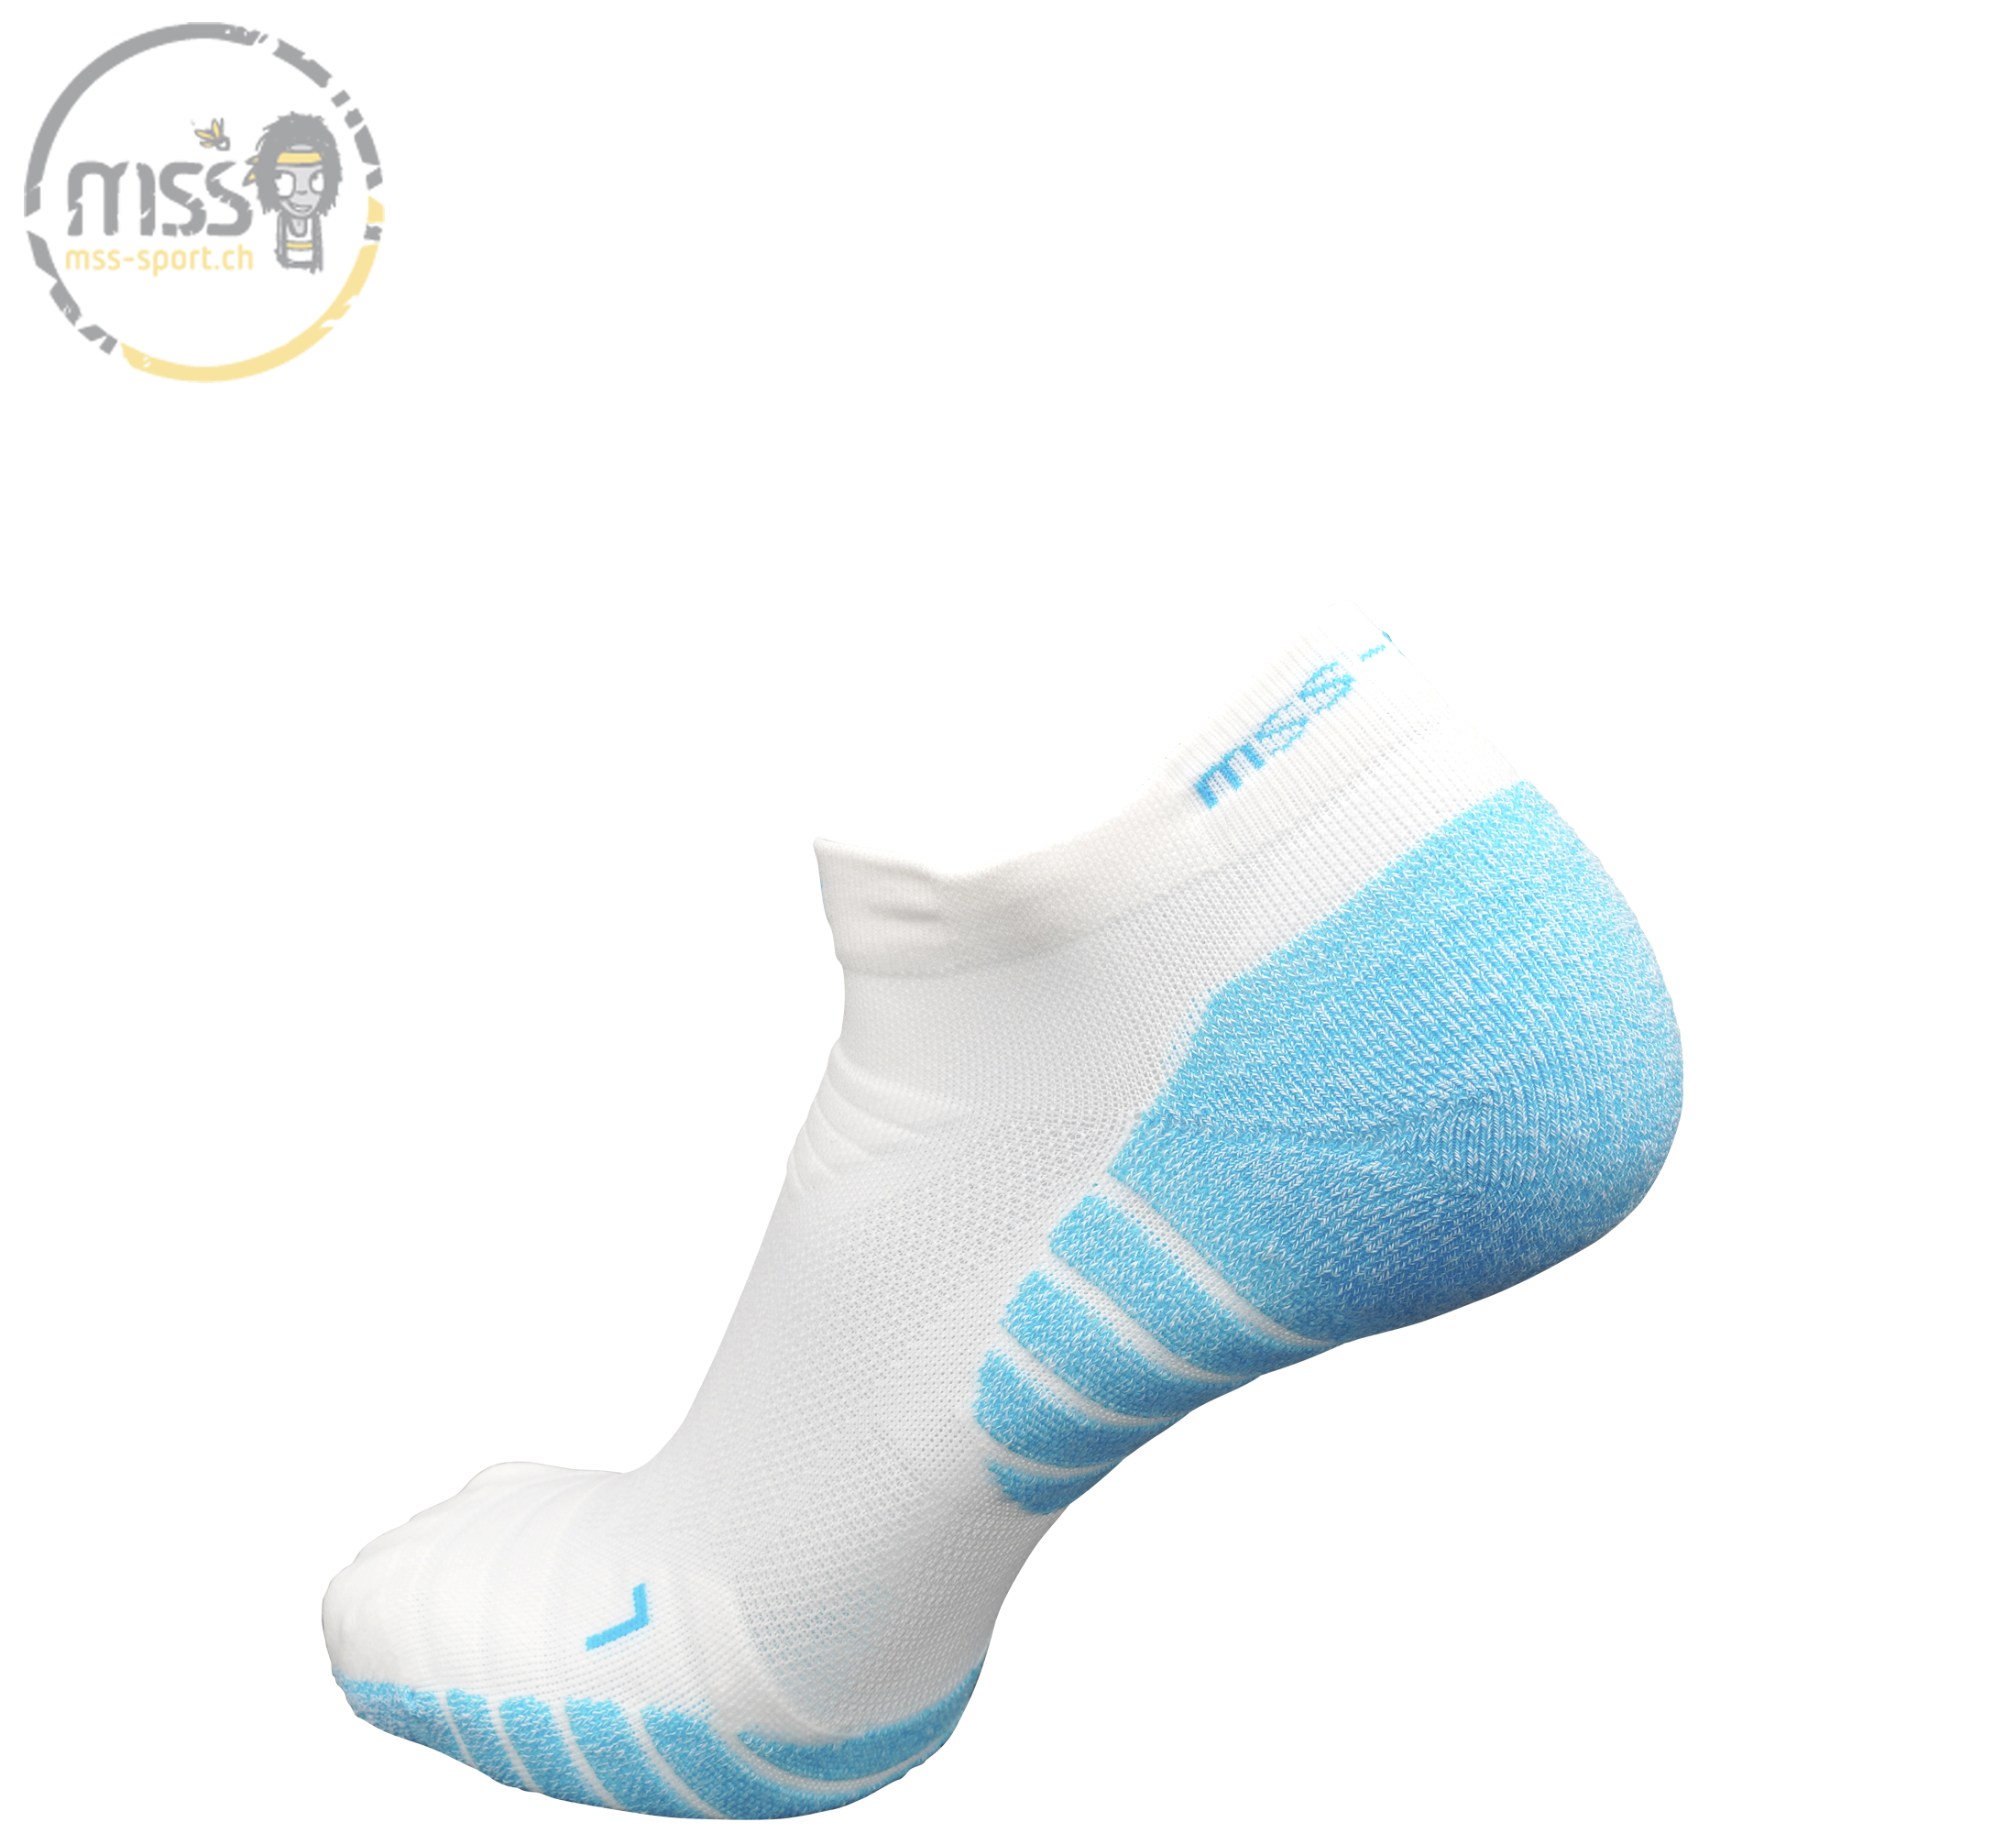 mss-socks GO 7300 low Lady white blue